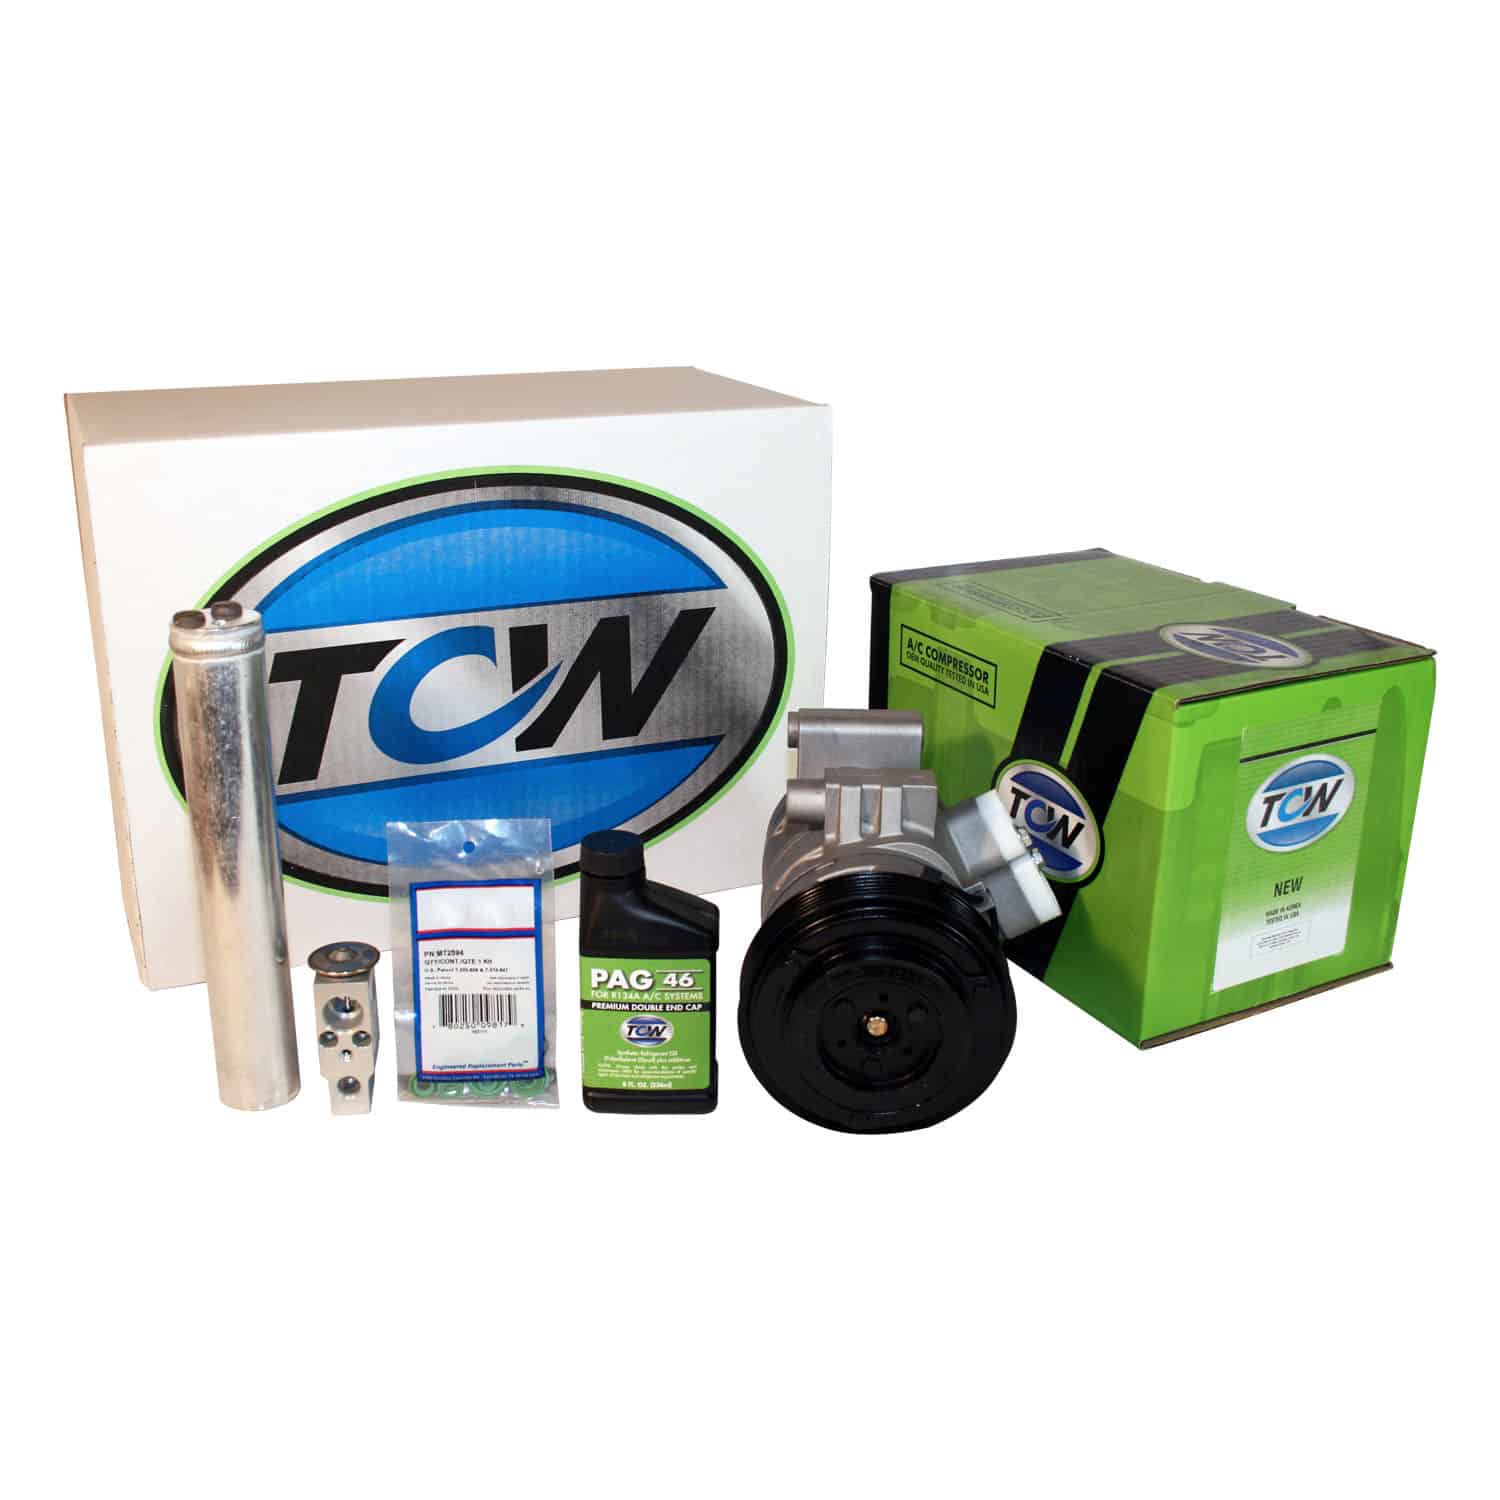 TCW Vehicle A/C Kit K1000524N New